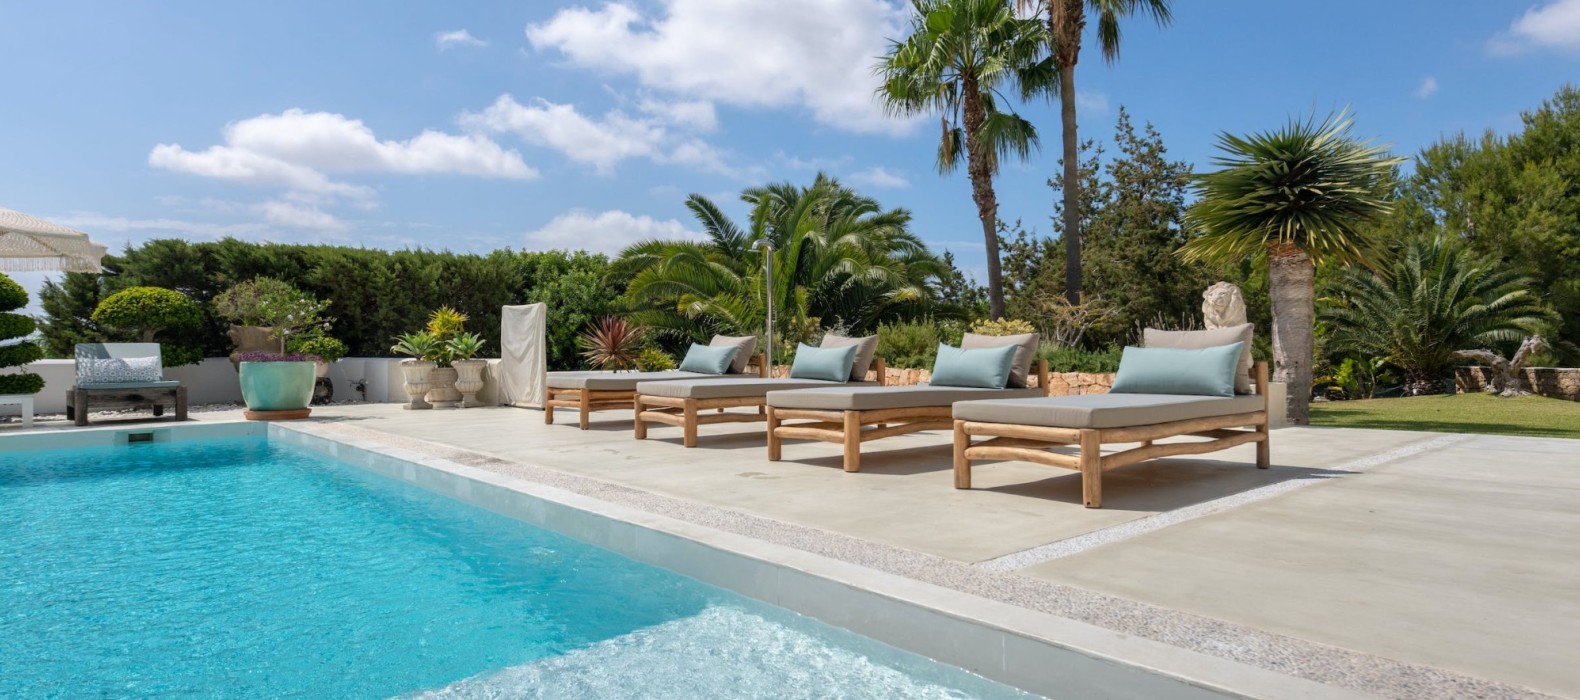 Exterior pool area of Villa Glamour in Ibiza